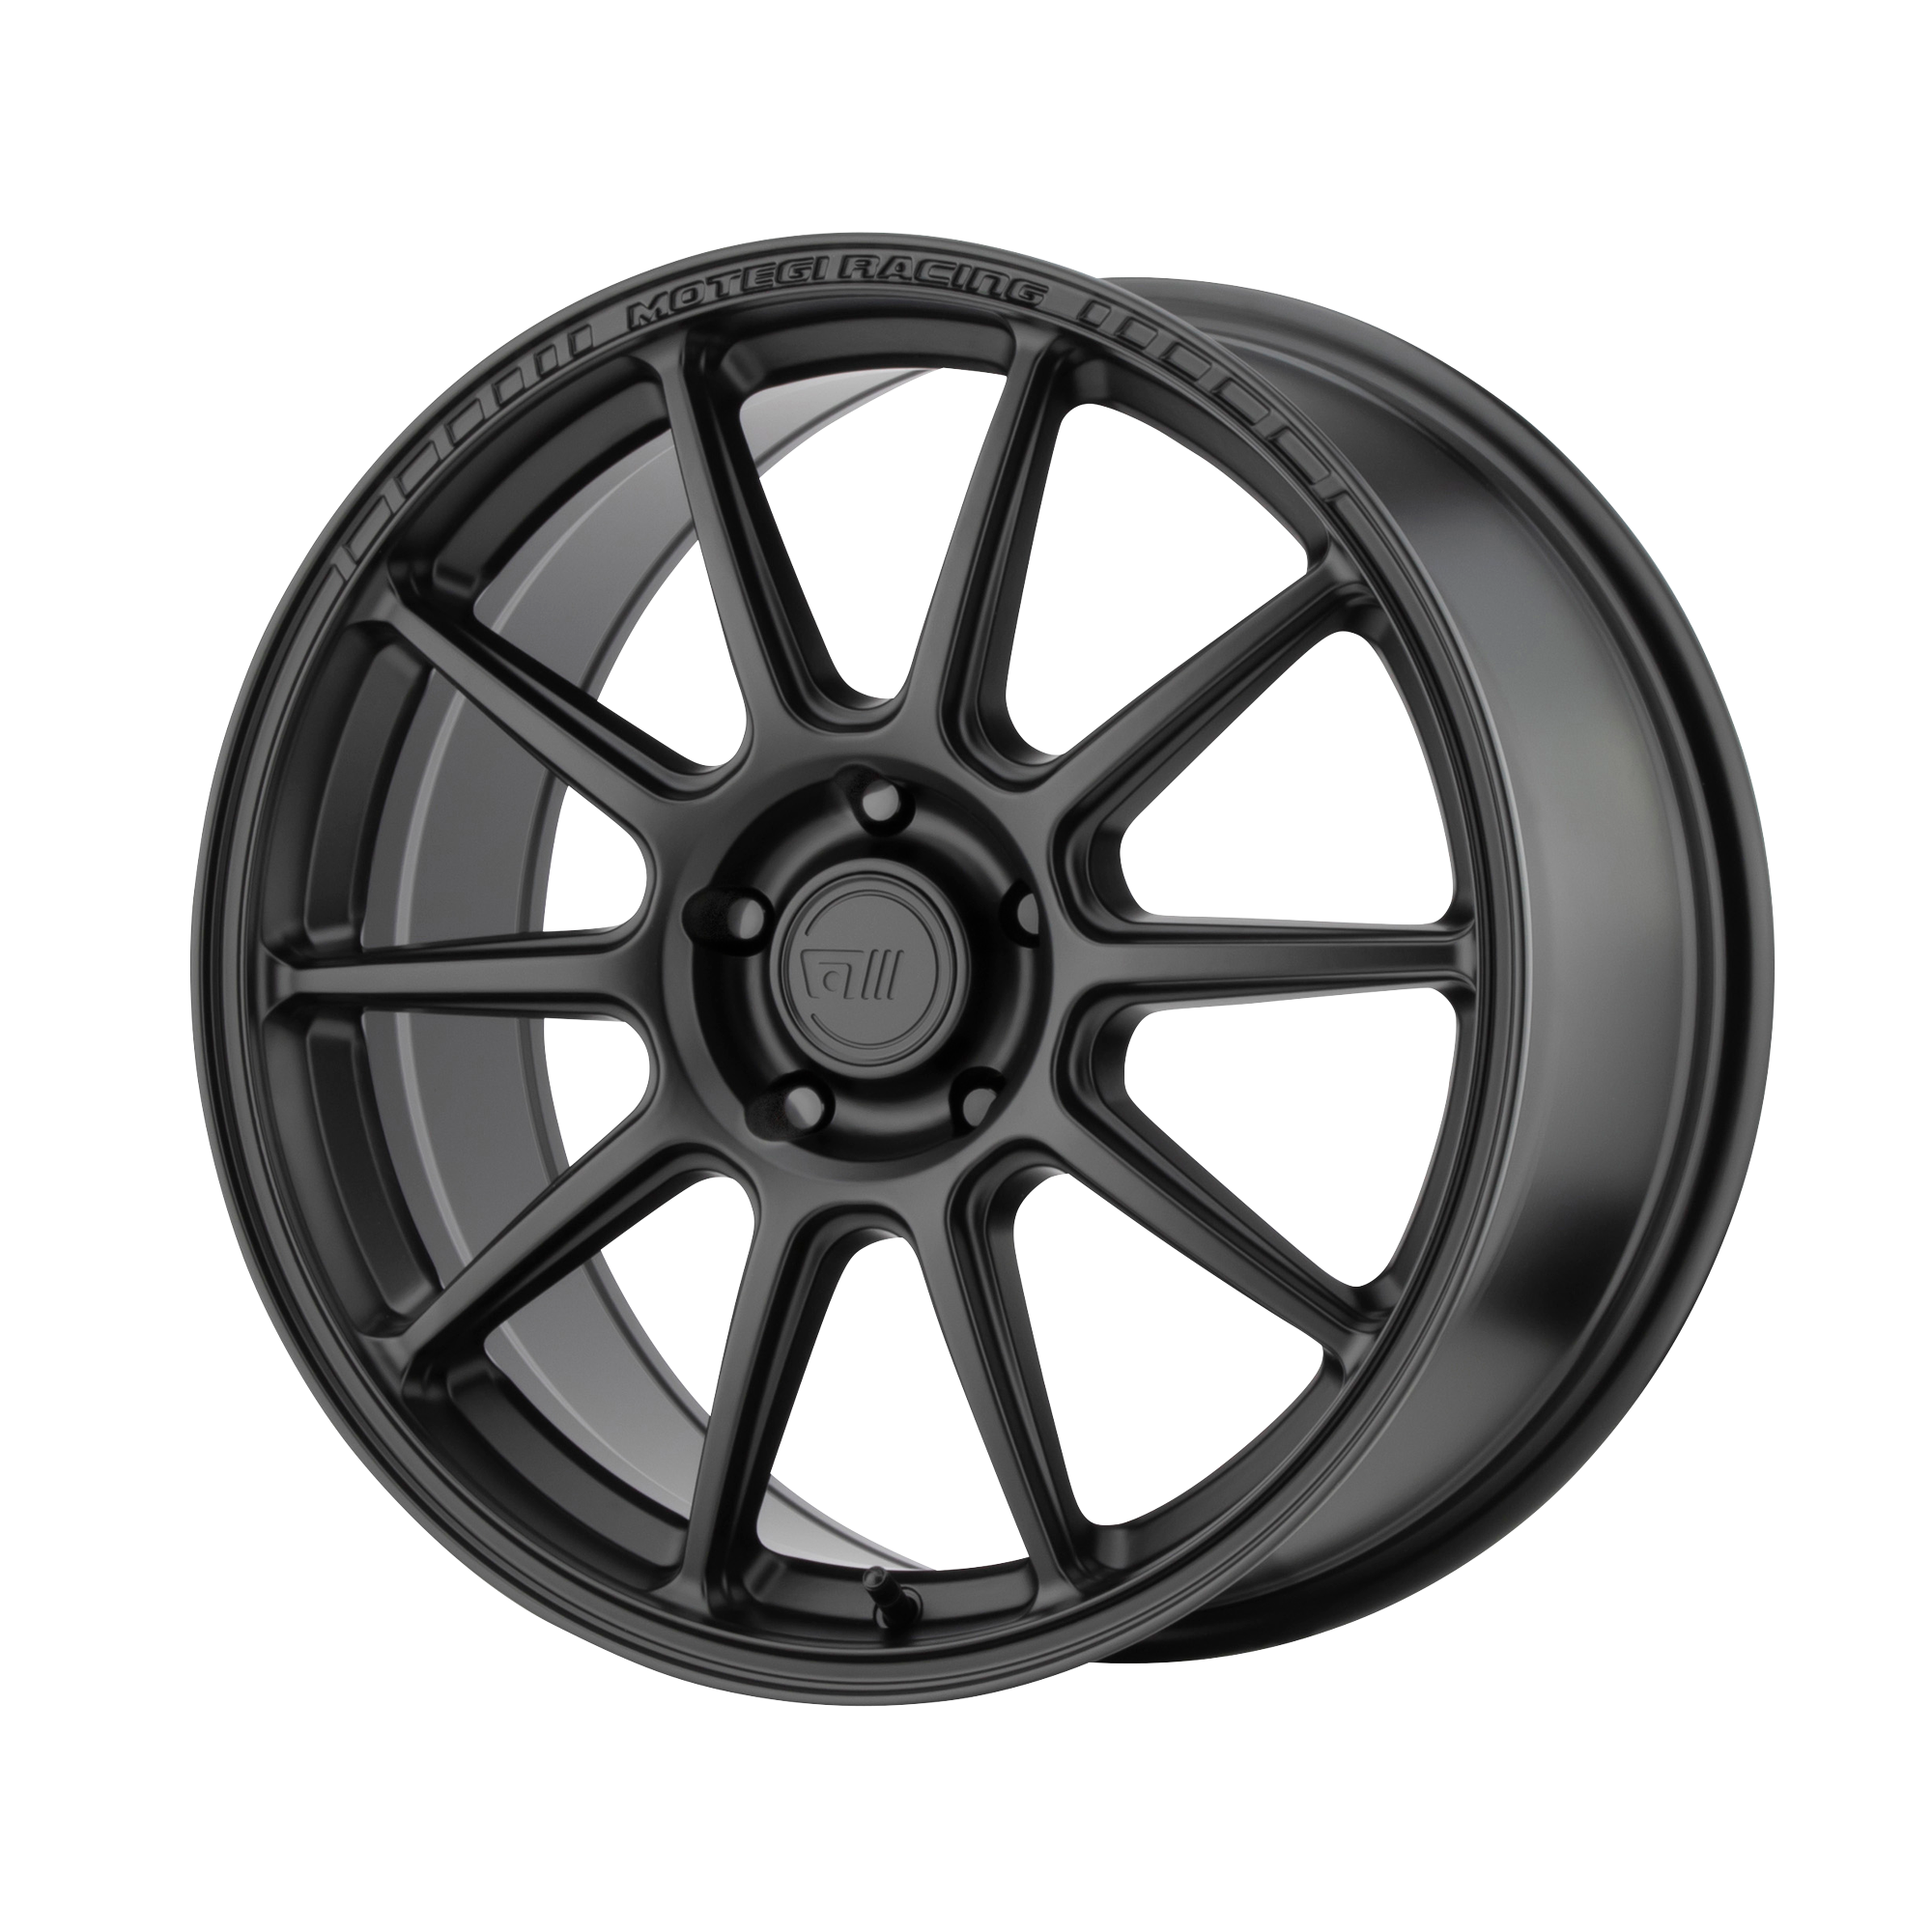 MR140 18x8.5 5x114.30 SATIN BLACK (35 mm) - Tires and Engine Performance